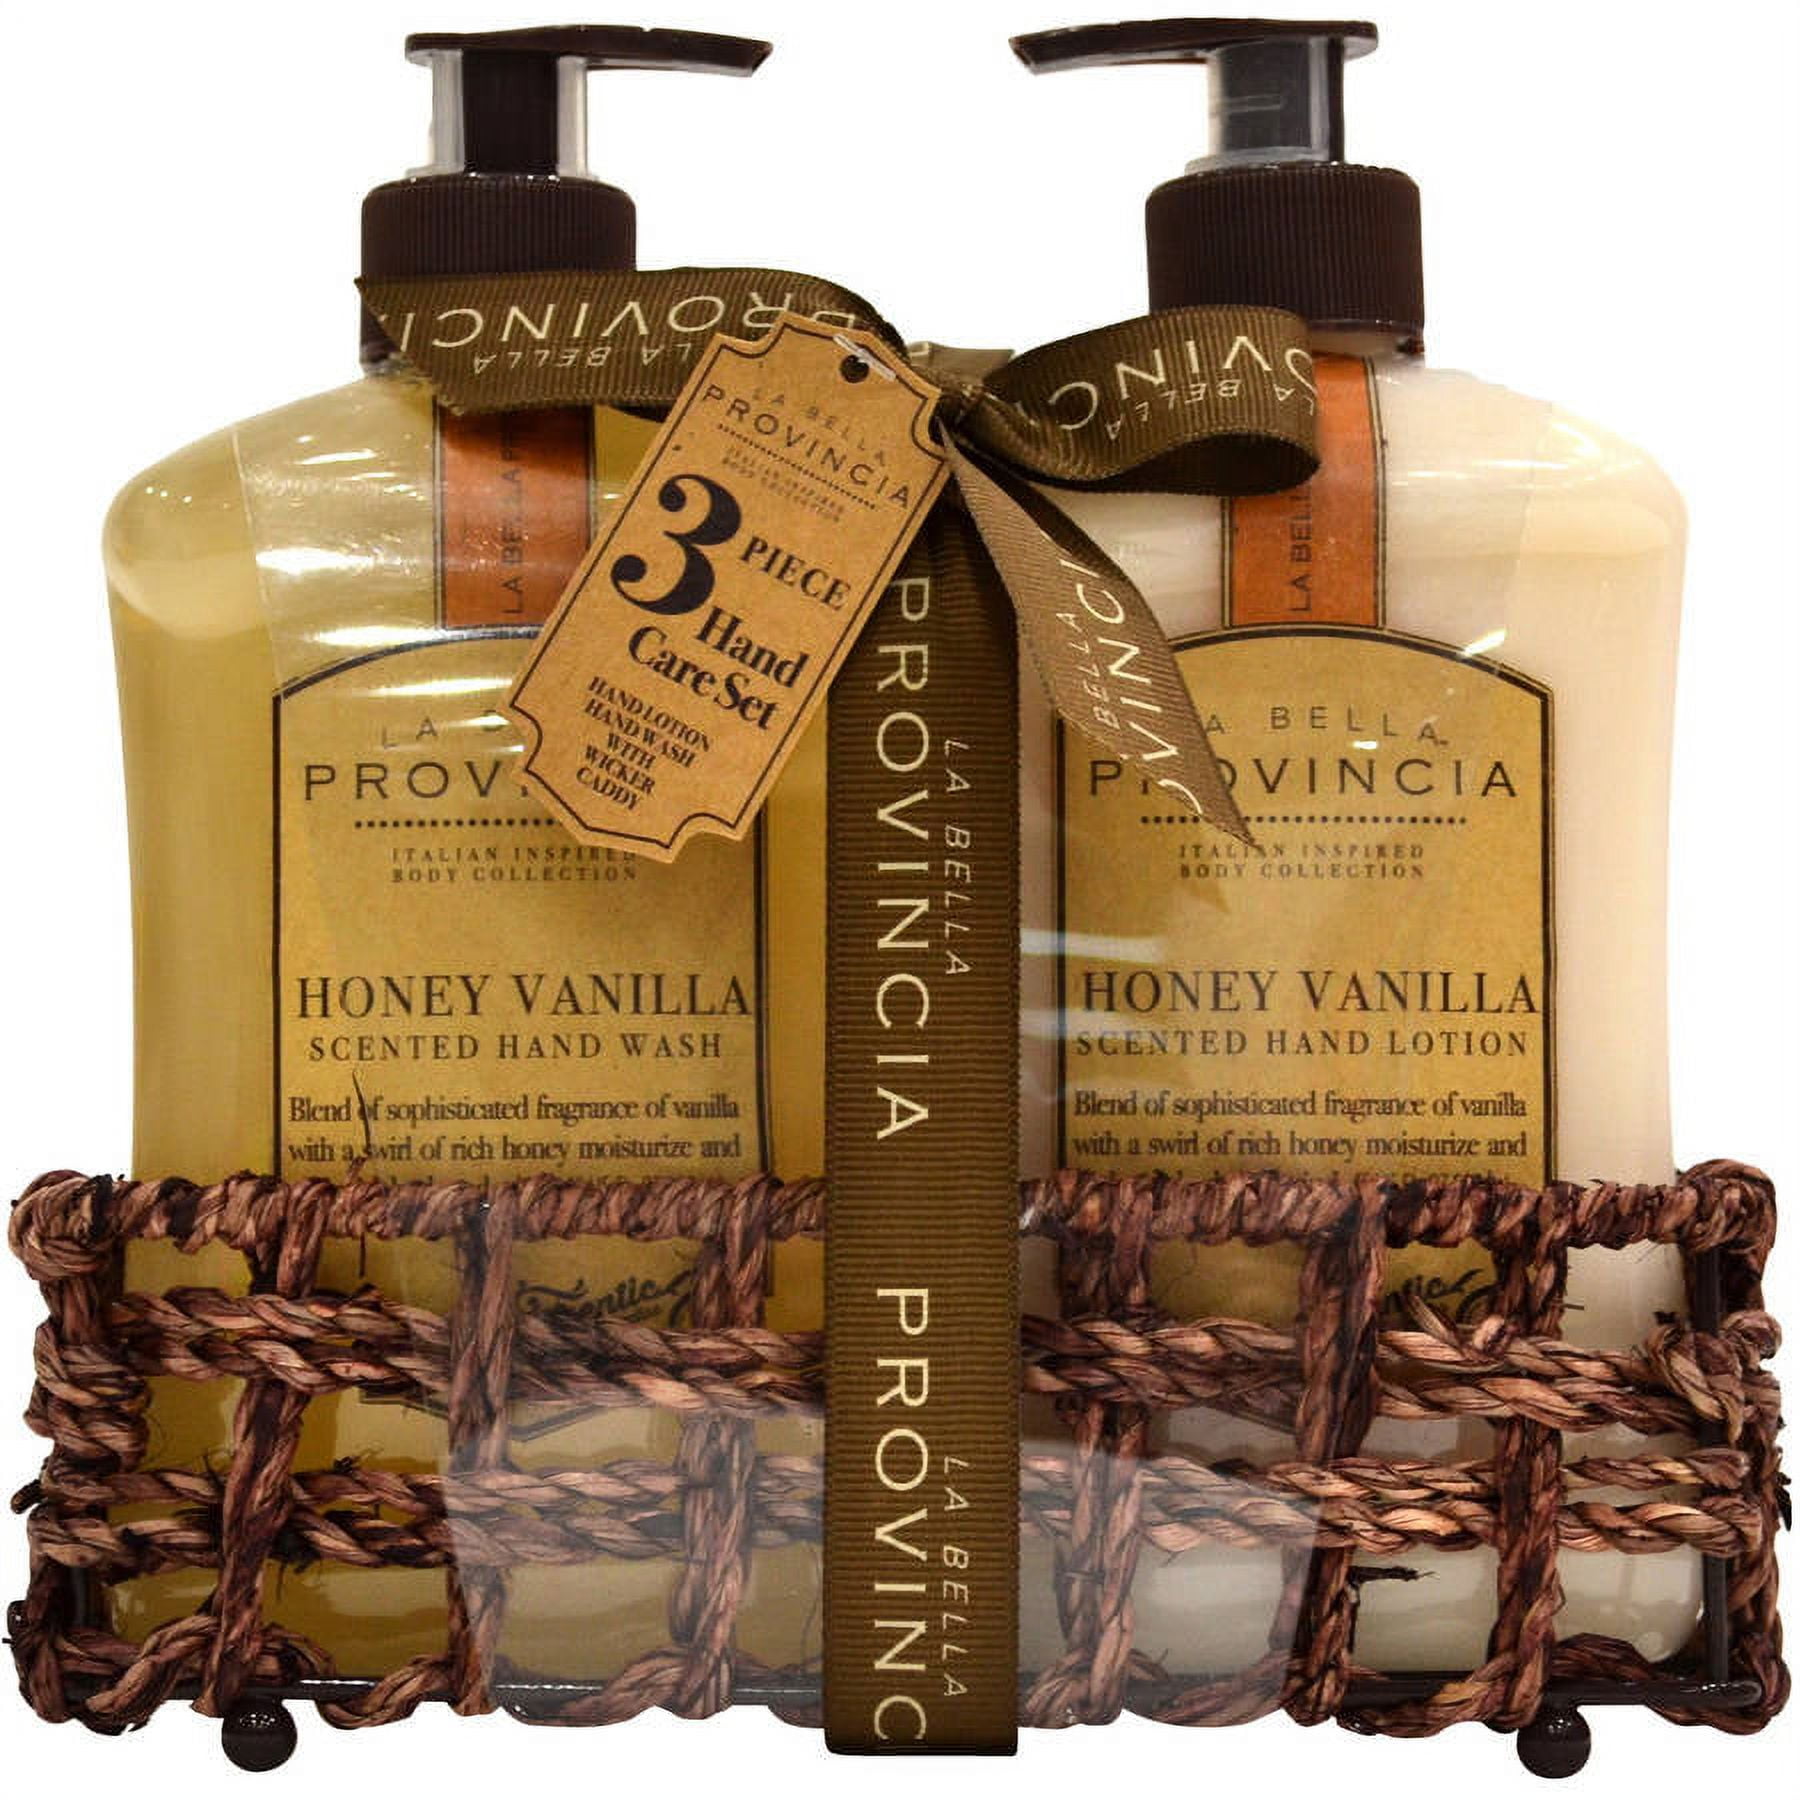 Aroma Depot on Instagram: Discover the enchanting Honey Vanilla